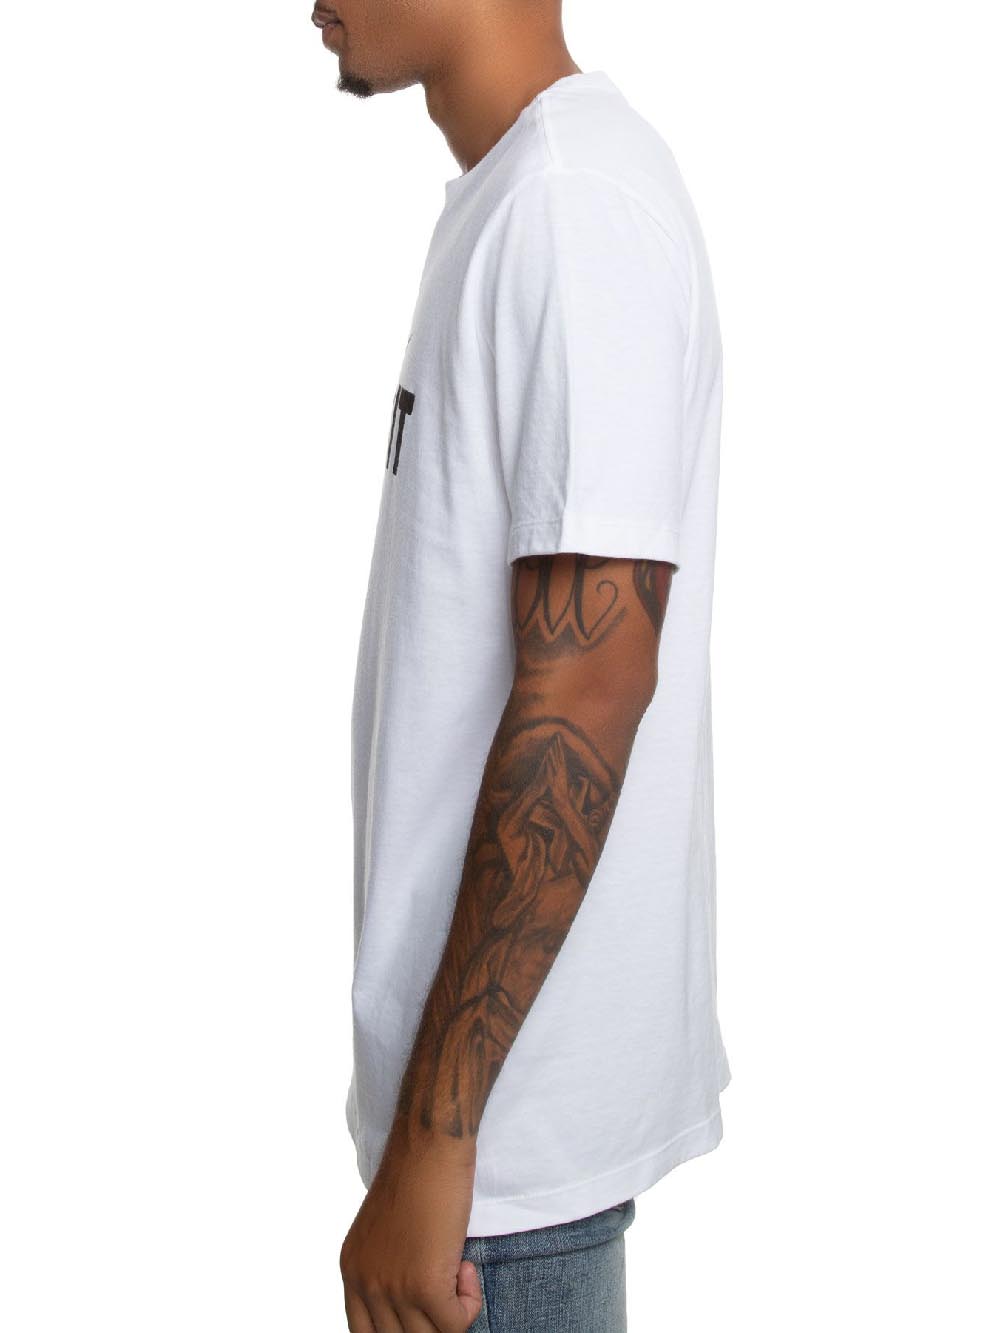 NIke T-shirt Uomo Bianco